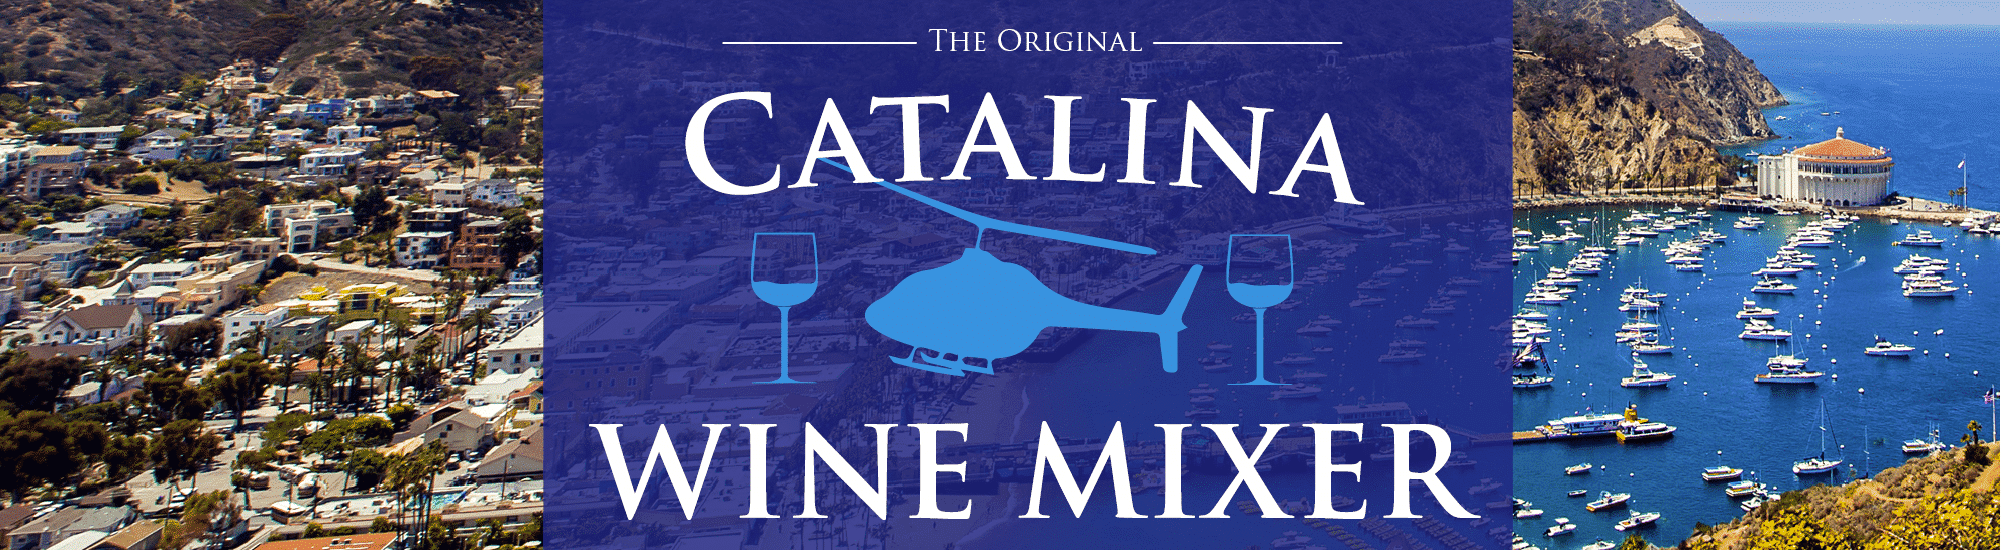 The Catalina Wine Mixer Cannabis Strain